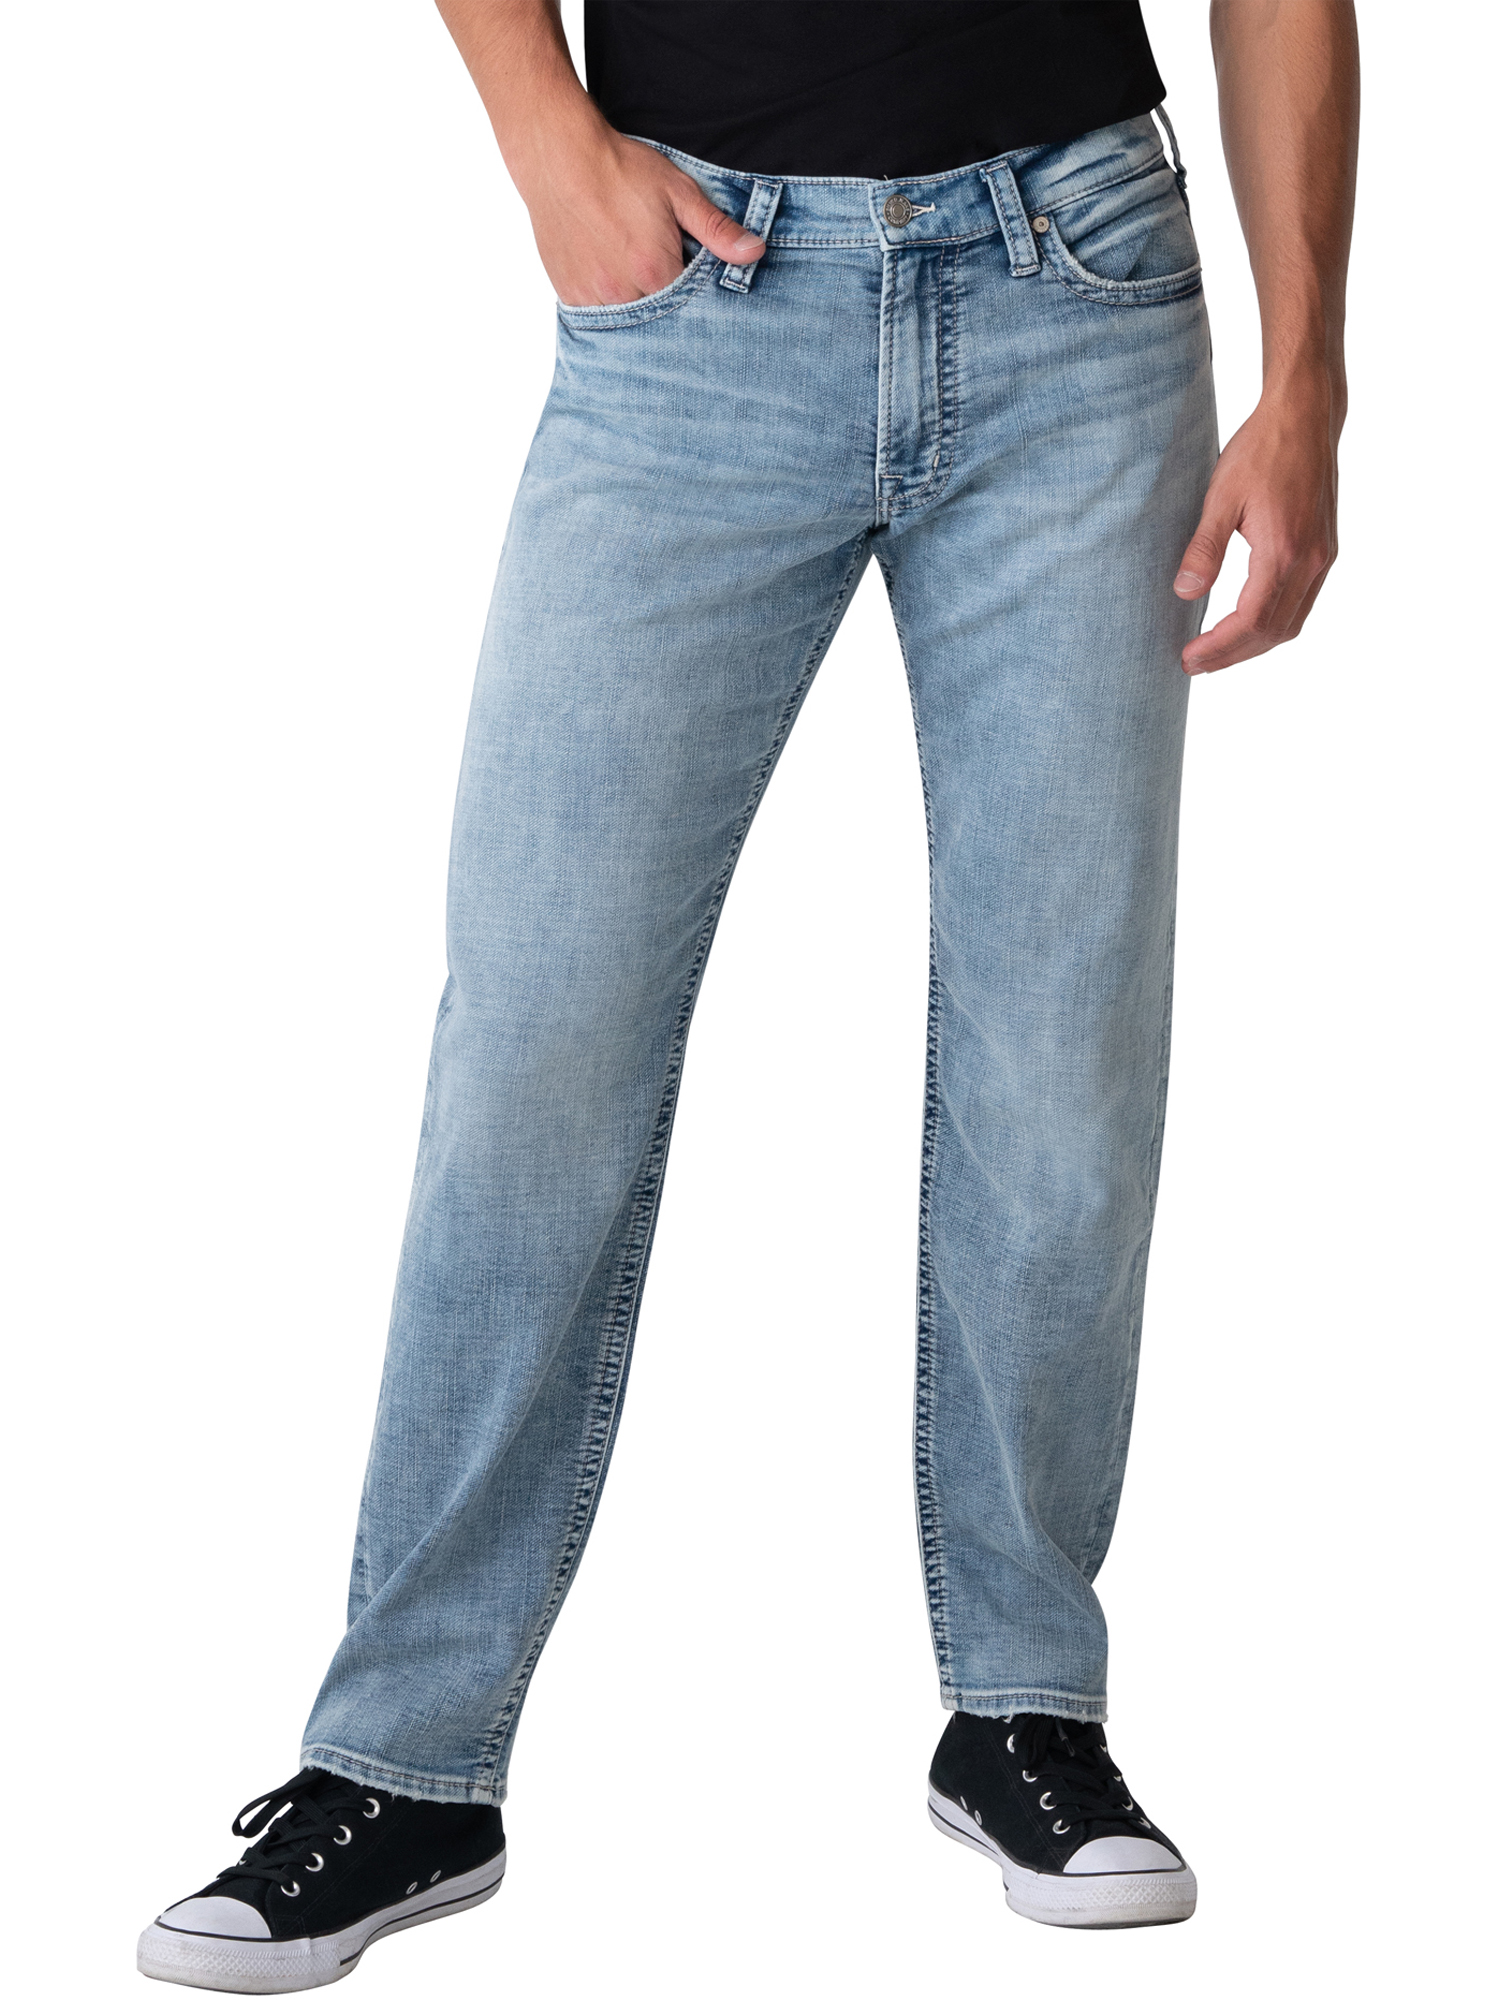 Silver Jeans Co. Men's Kenaston Slim Fit Slim Leg Jeans, Waist Sizes 28-40 - image 1 of 3